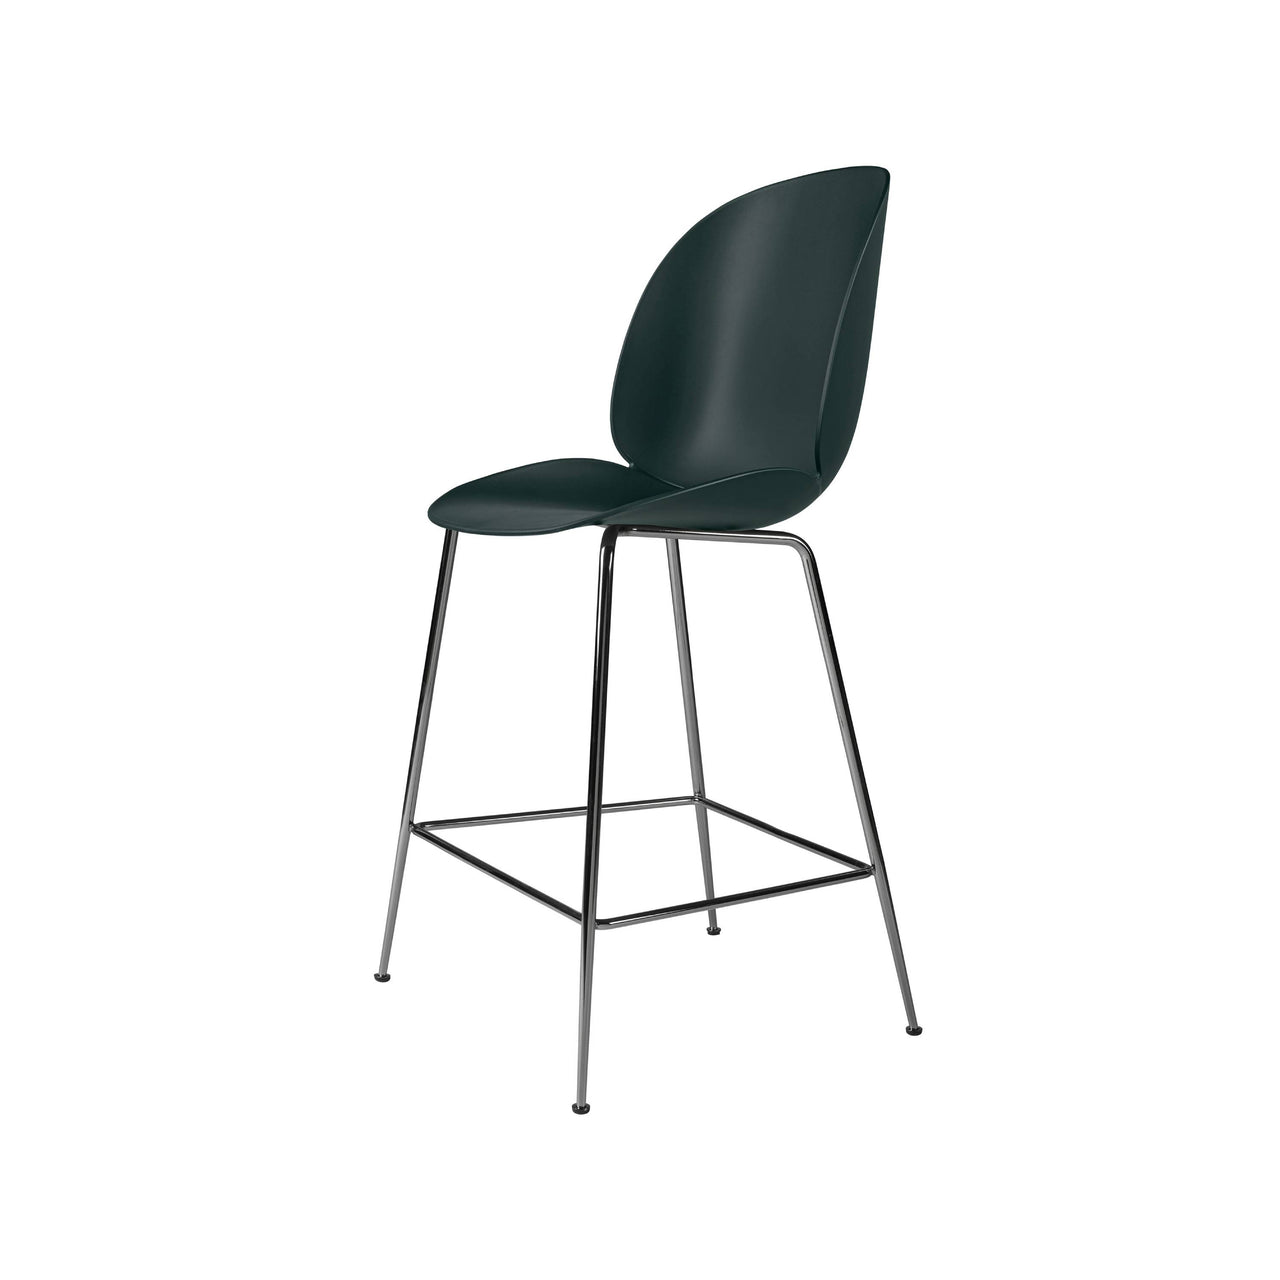 Beetle Bar + Counter Chair: Felt Glides + Counter + Dark Green + Black Chrome